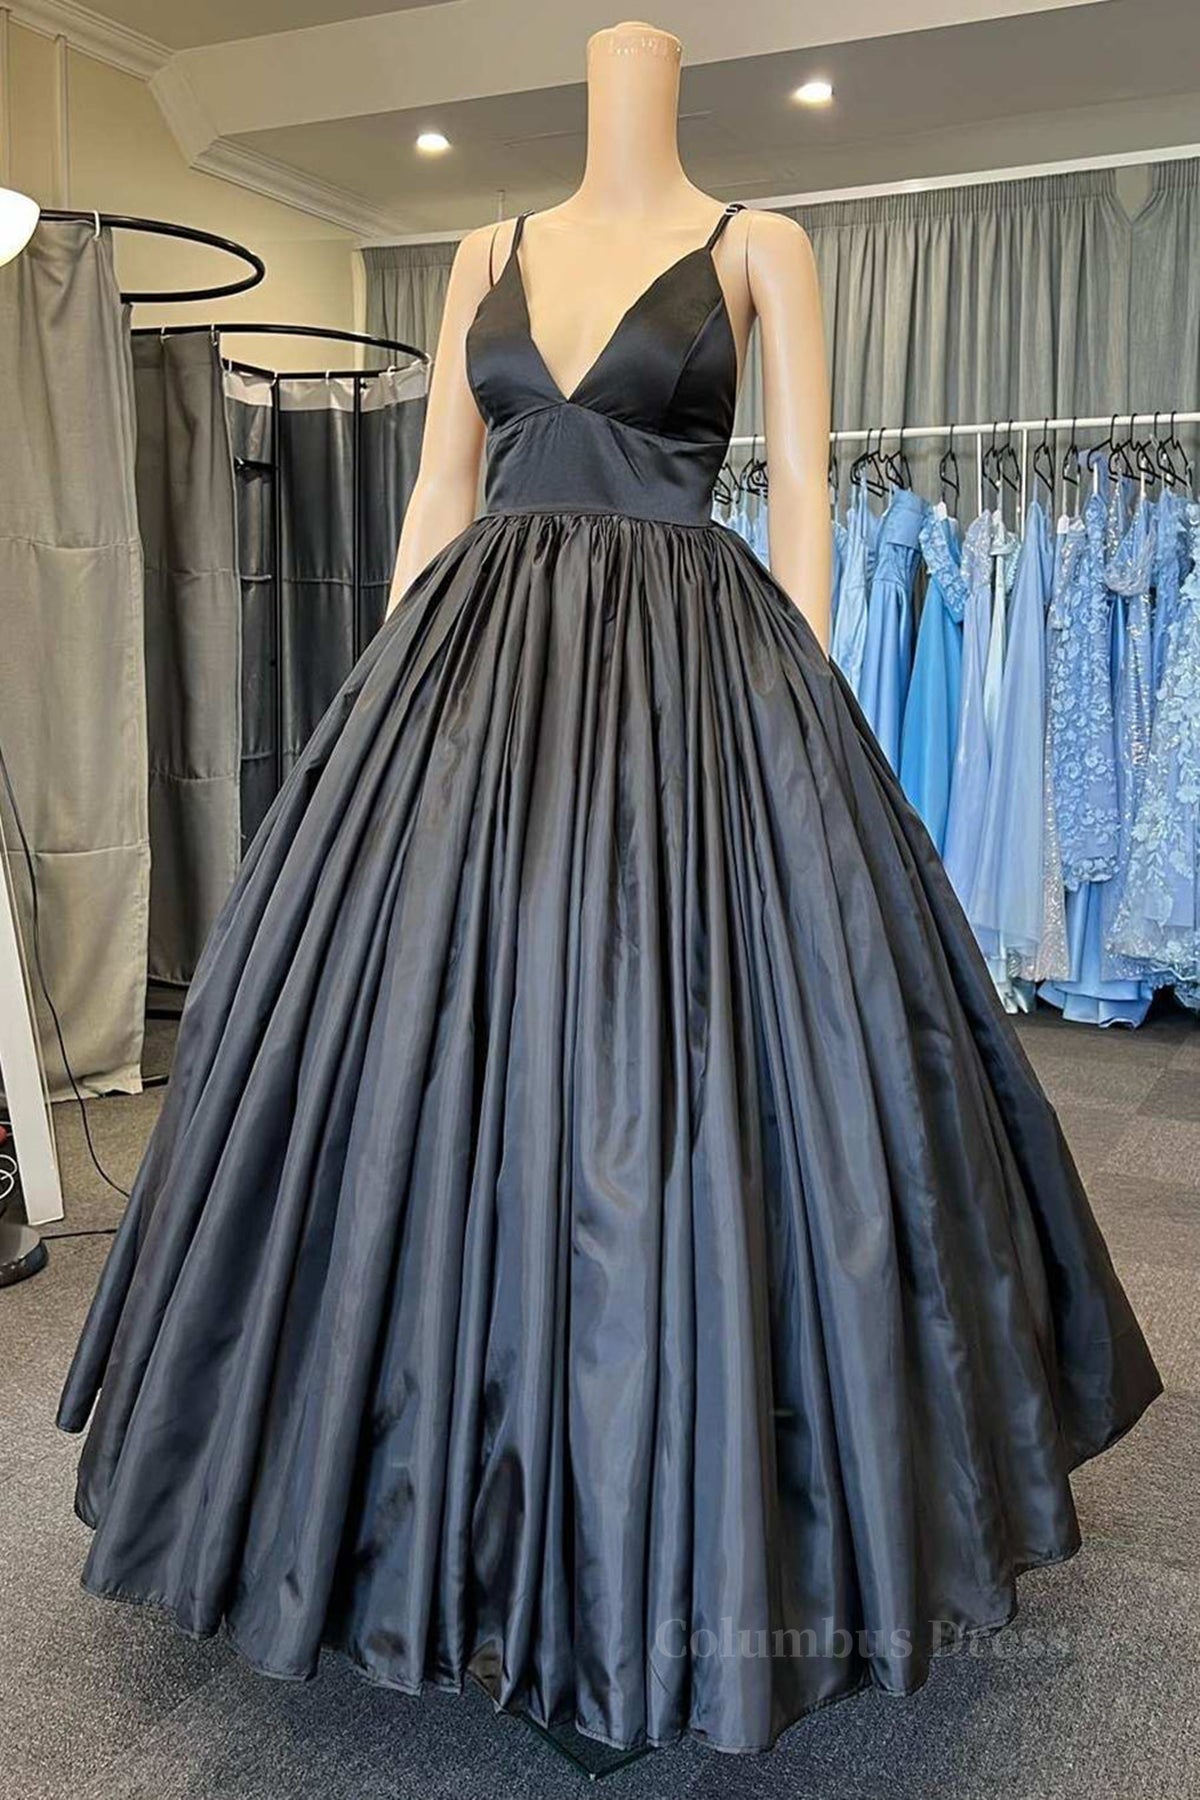 Bridesmaid Dress Neutral, A Line V Neck Black Satin Long Prom Dress with Pocket, V Neck Black Formal Graduation Evening Dress